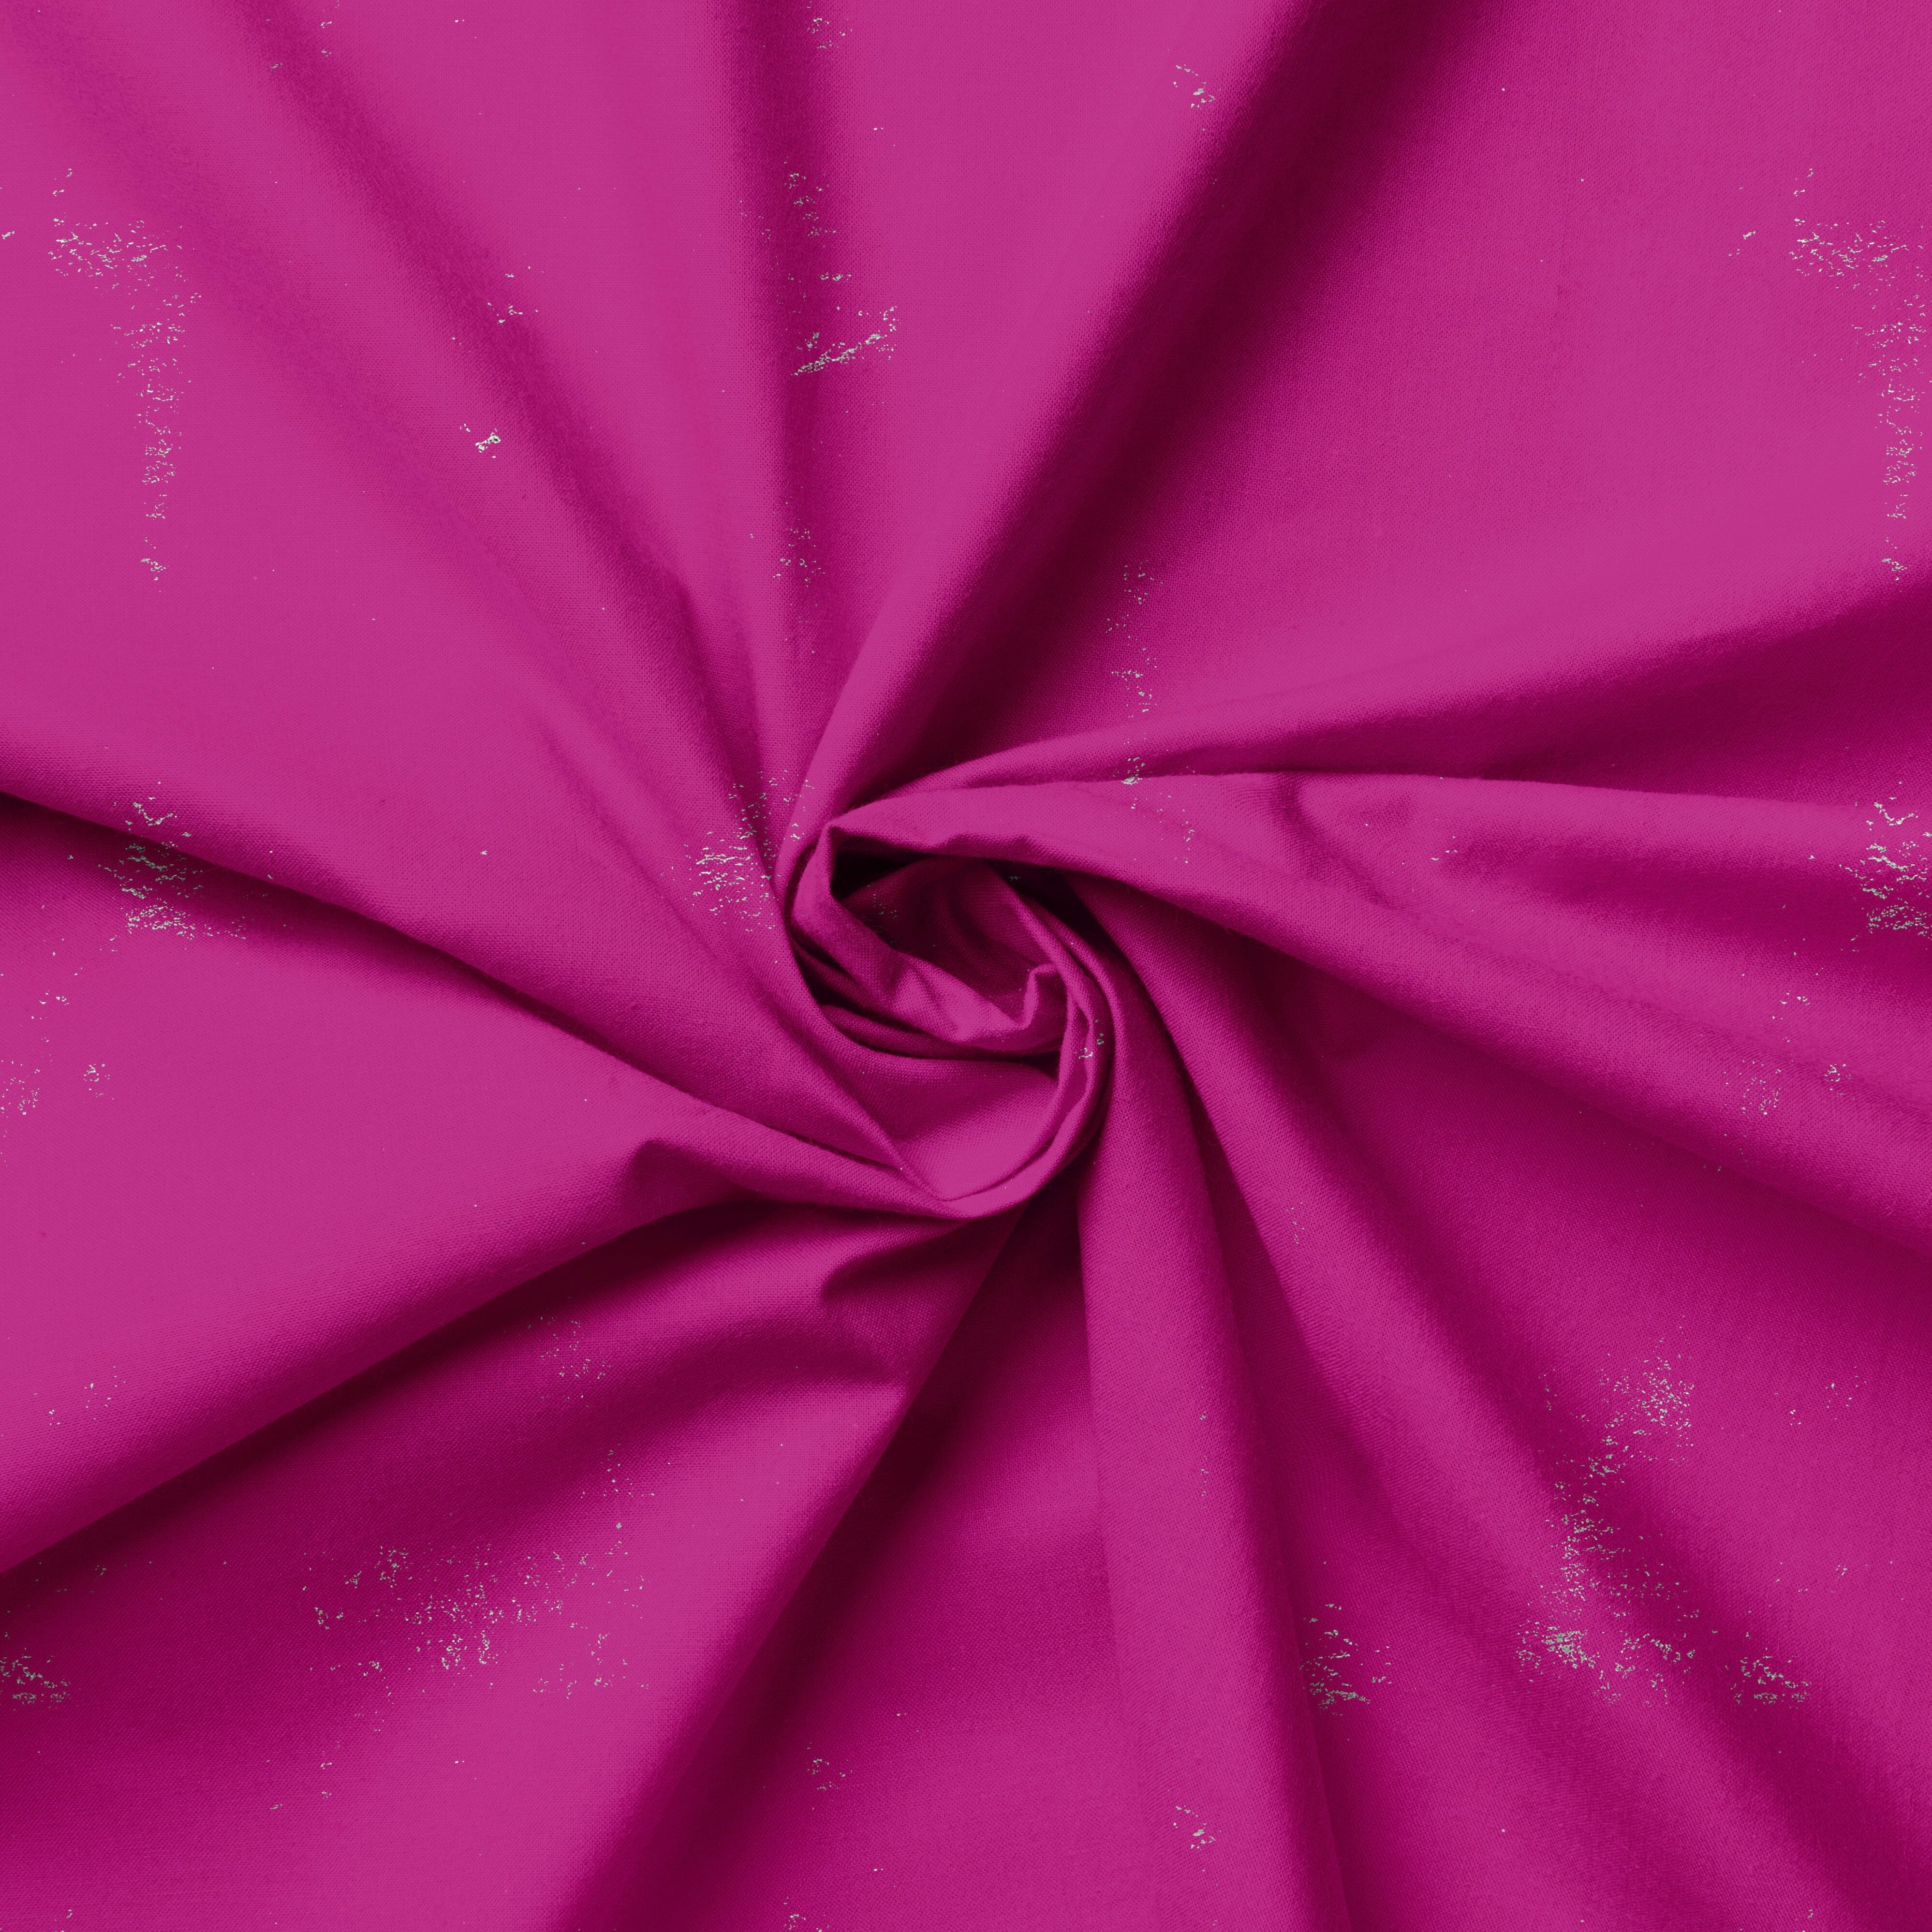 Vorbestellung Swimmy - Bade-/Sportwebware Ambrosia Paint pink Fabric poshpinks